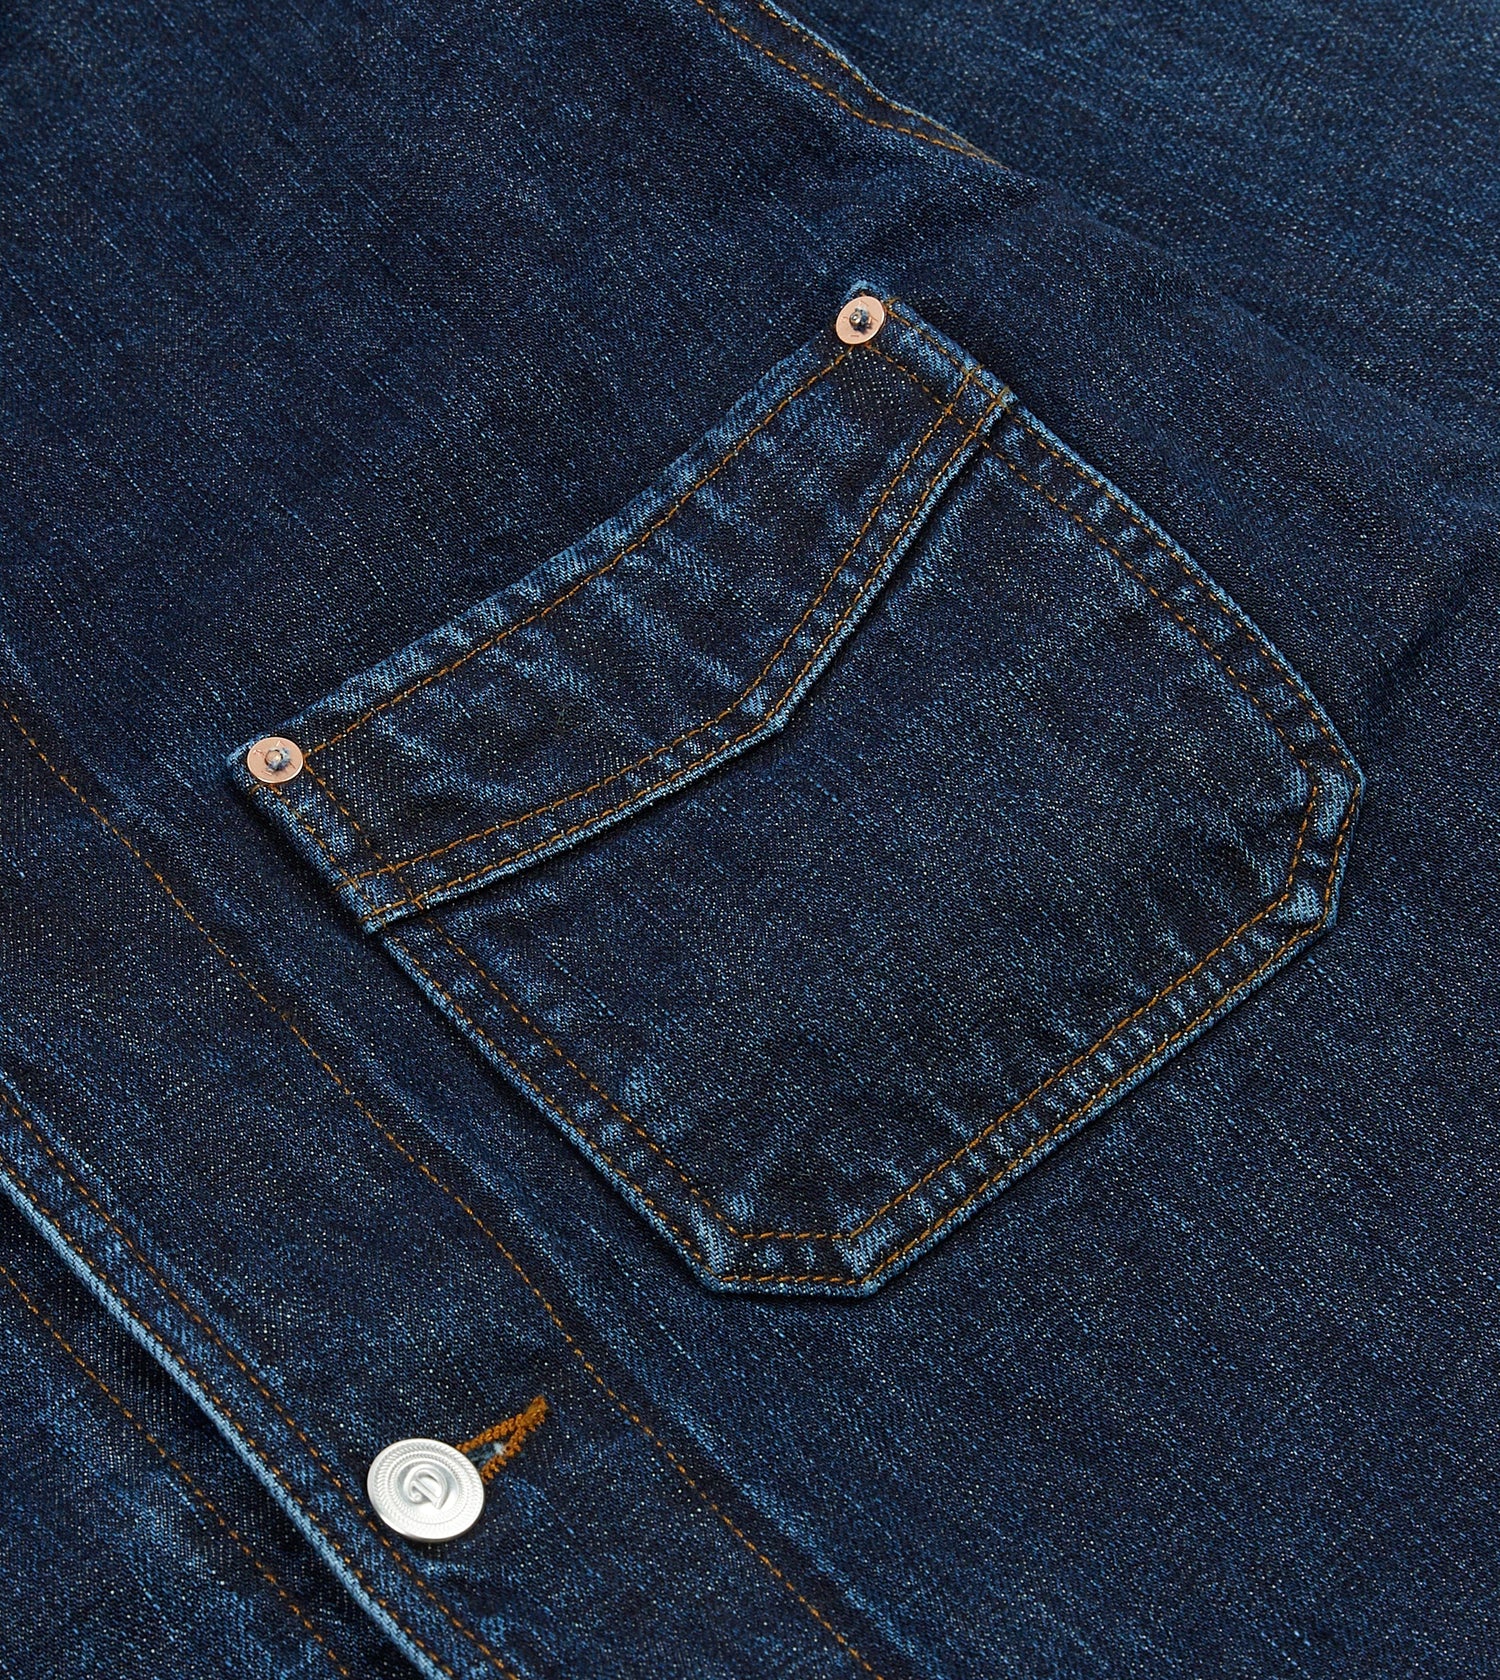 Stone Wash Selvedge Denim Five-Pocket Chore Jacket